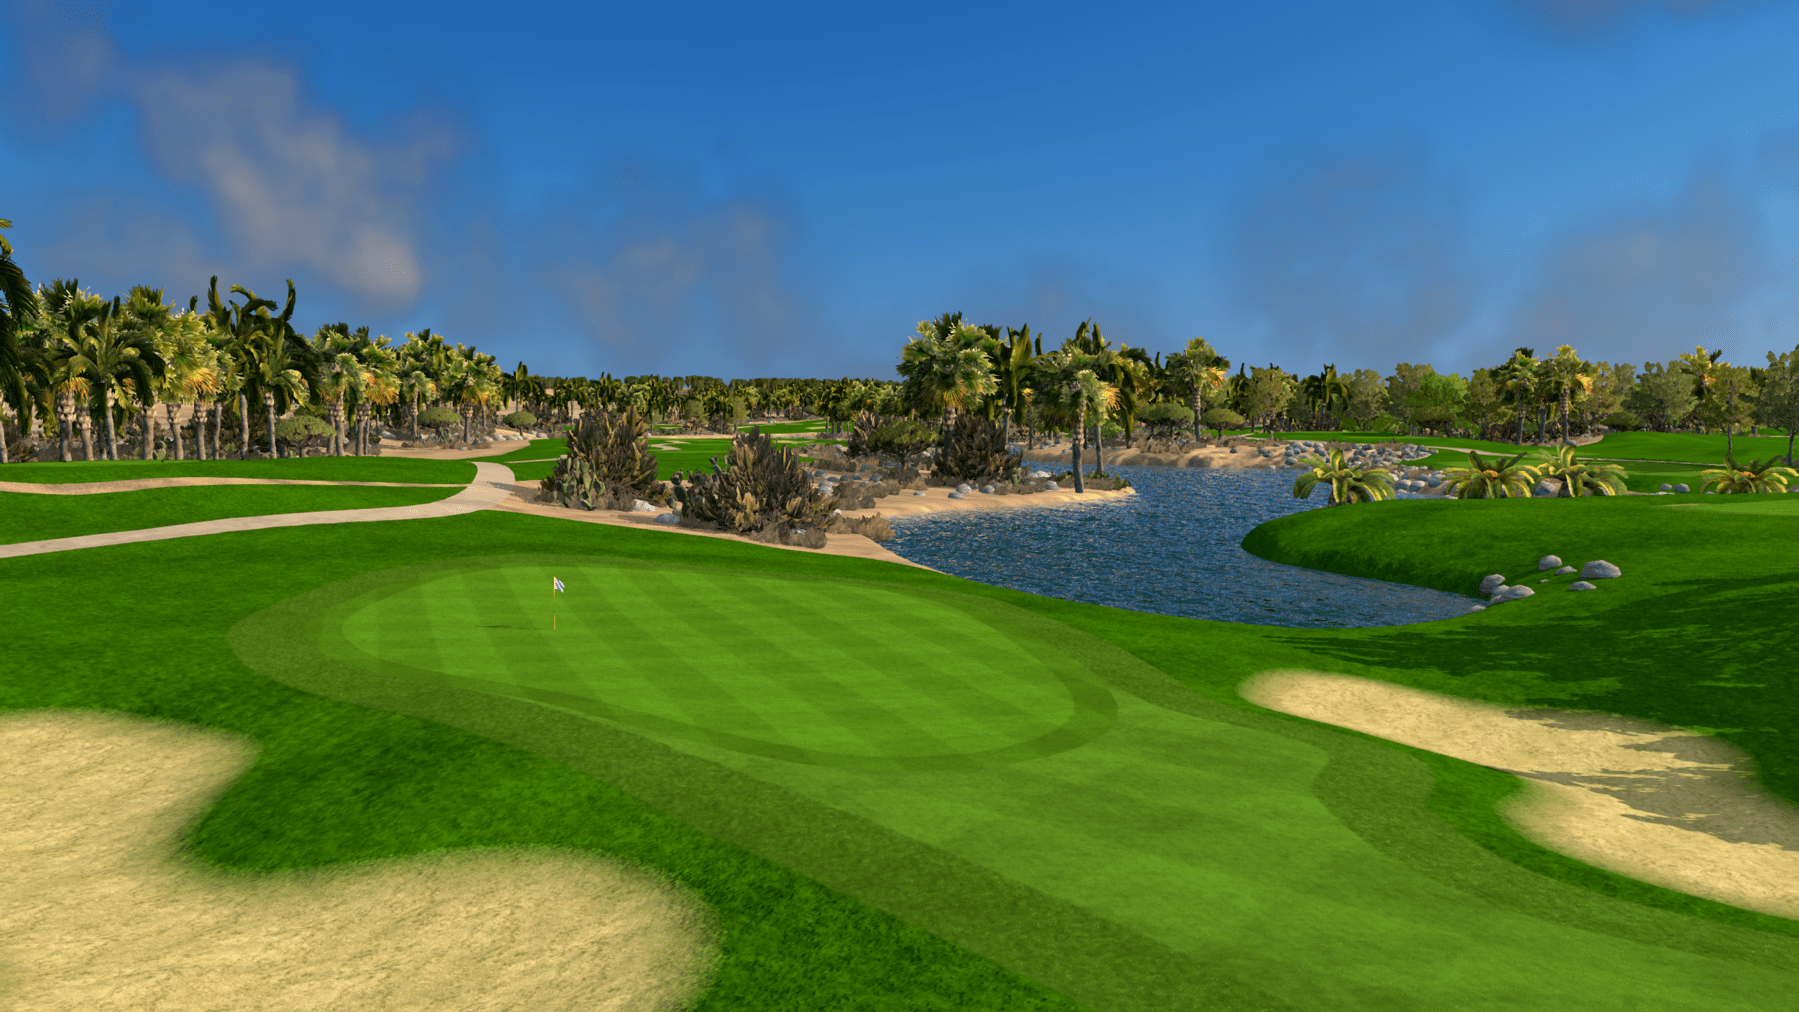 Indoor Golf Simulation of Abu Dhabi